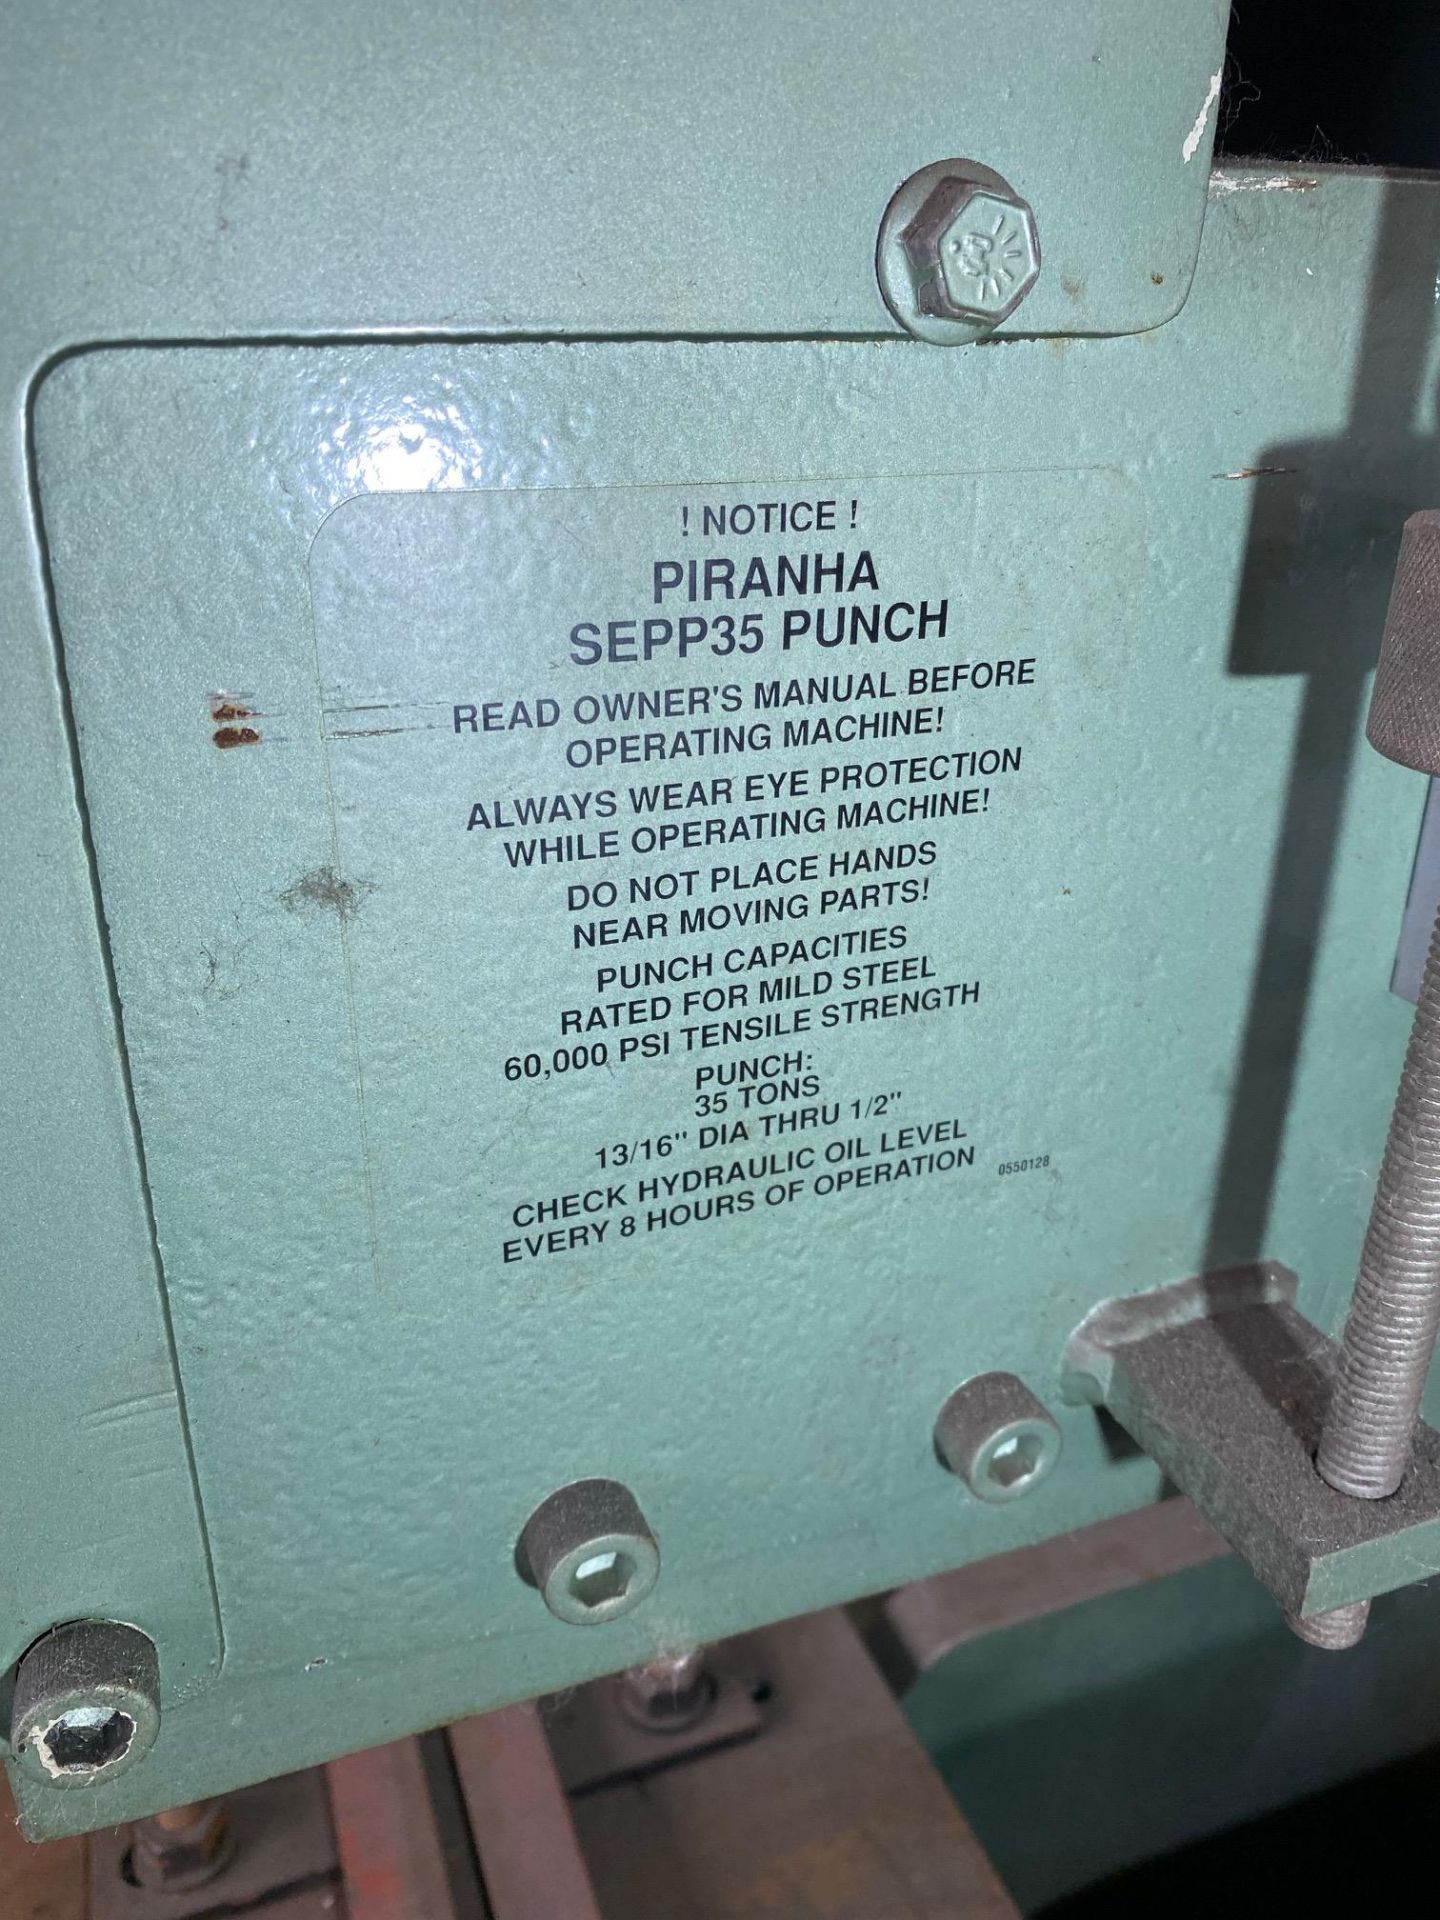 35-Ton Piranha SEPP35 Punch Press - Image 4 of 8